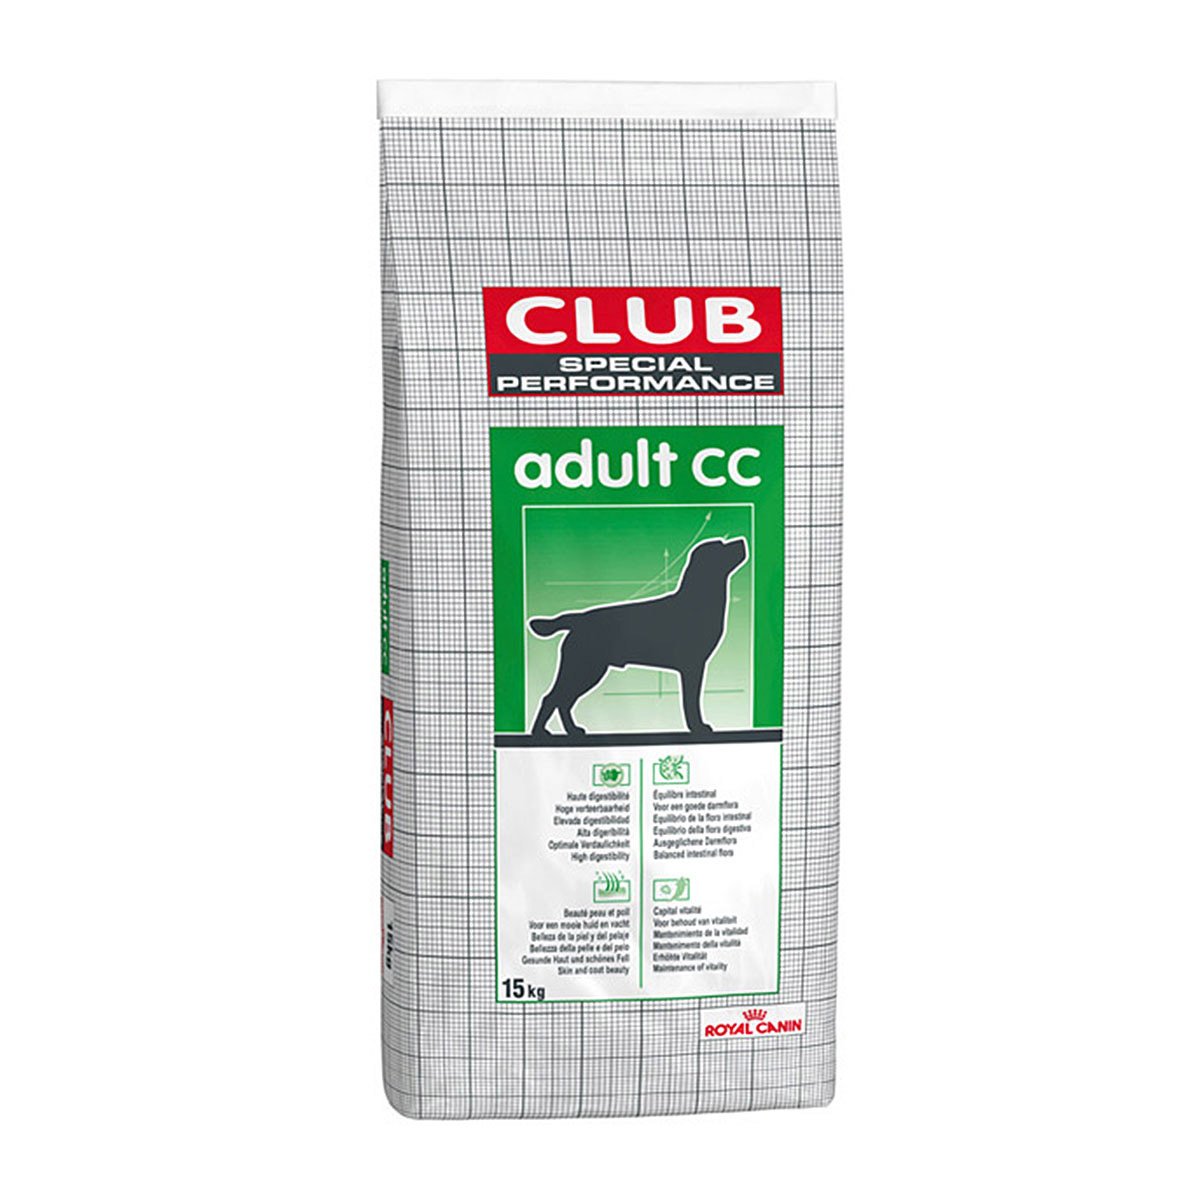 Royal Canin Special Club Performance Adult CC 15kg